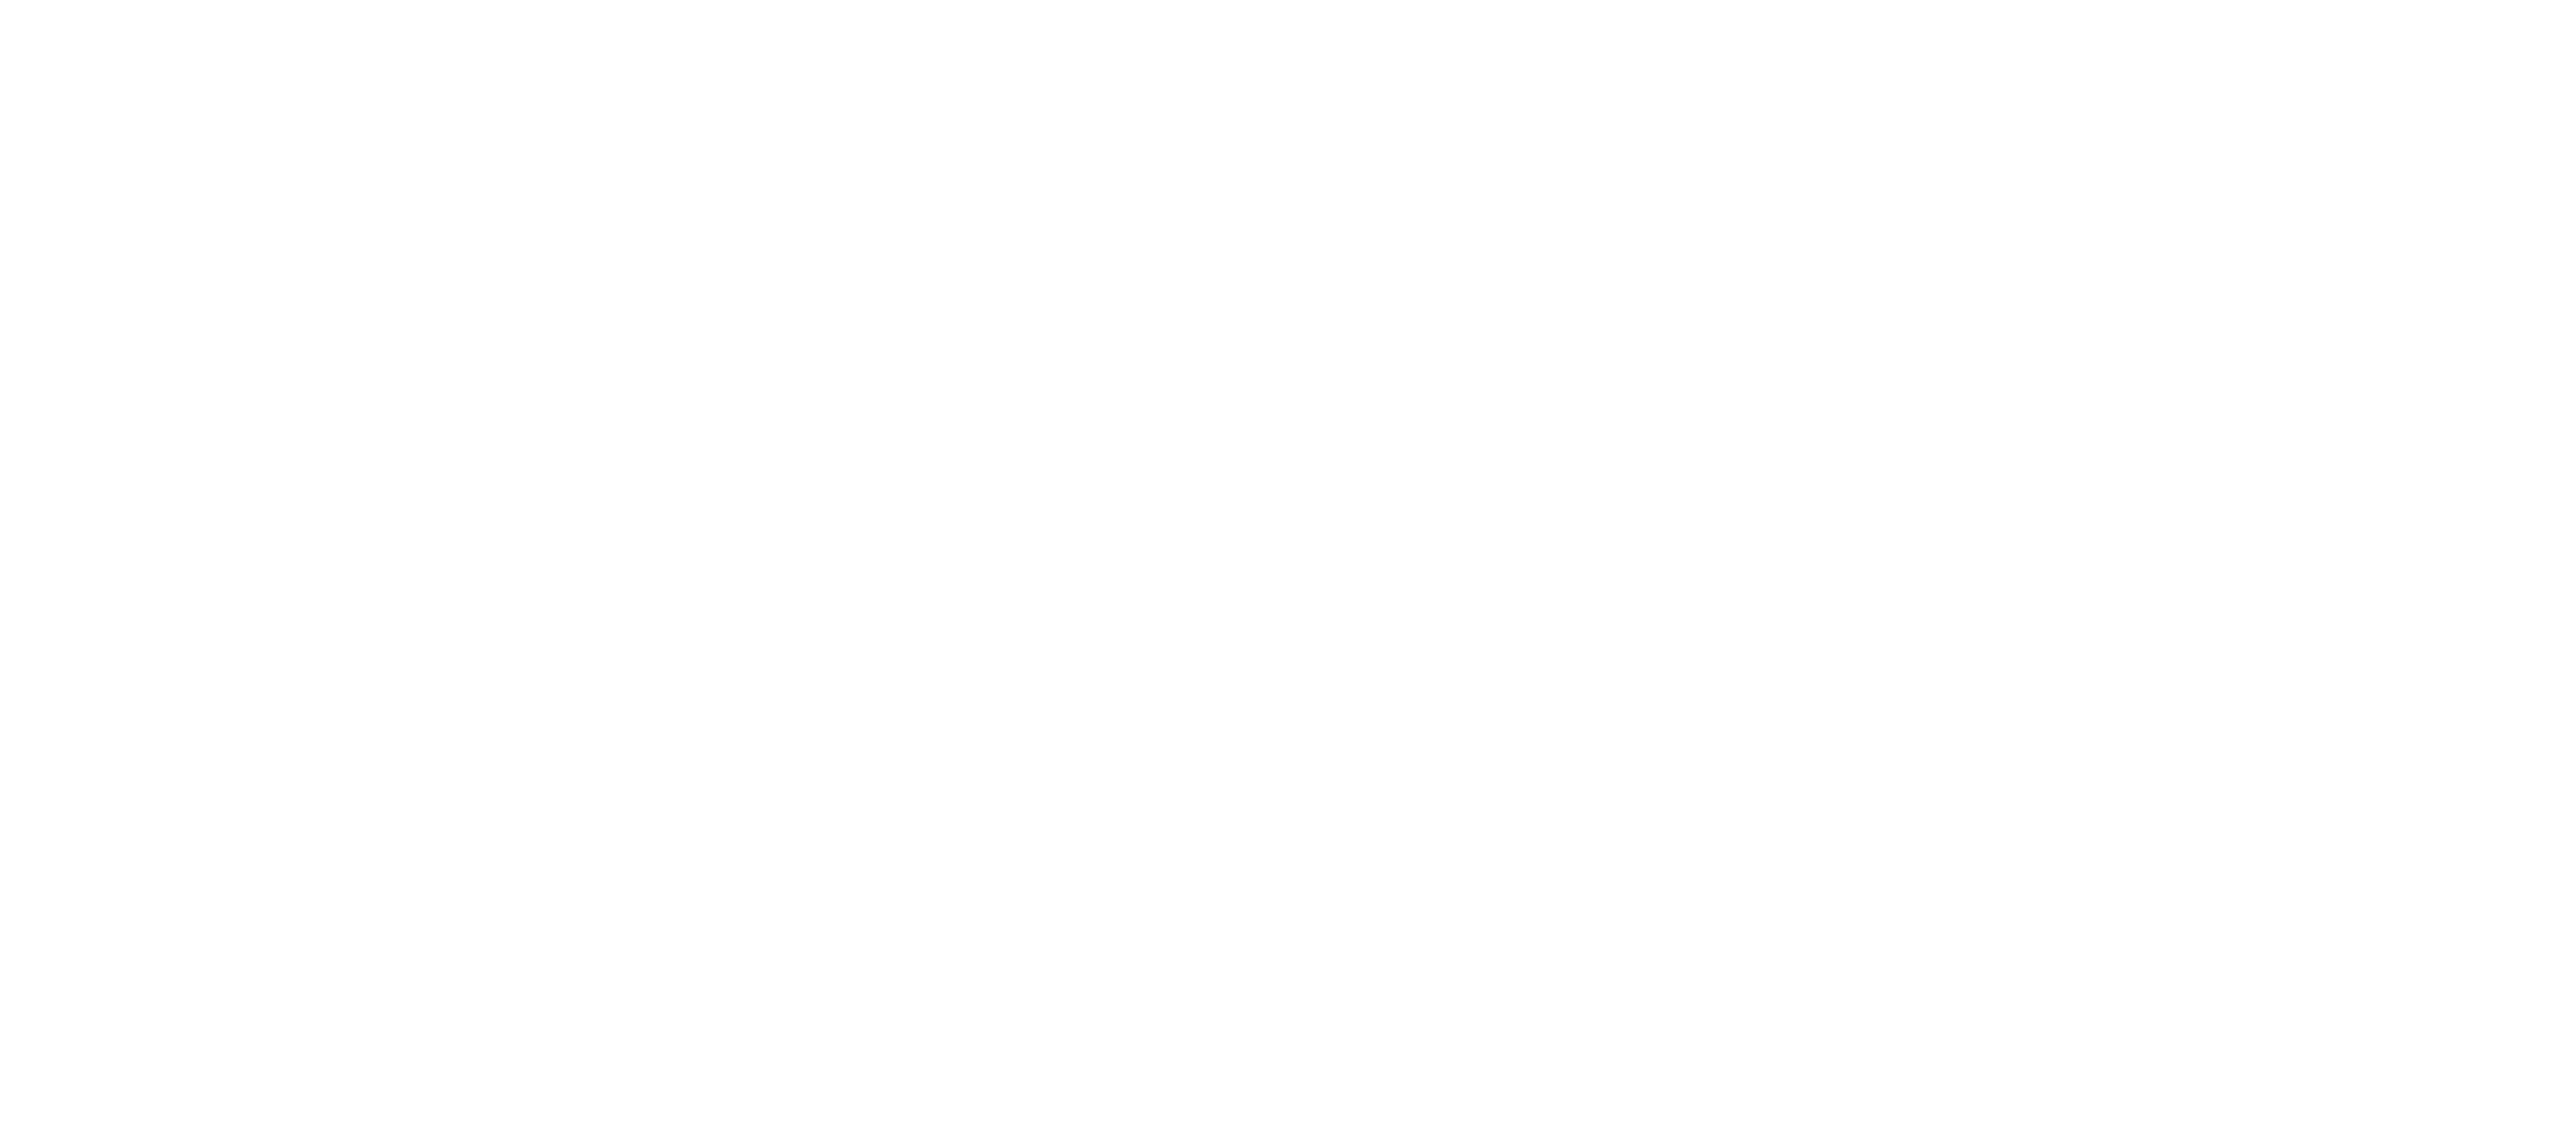 Sun microsystems Logo